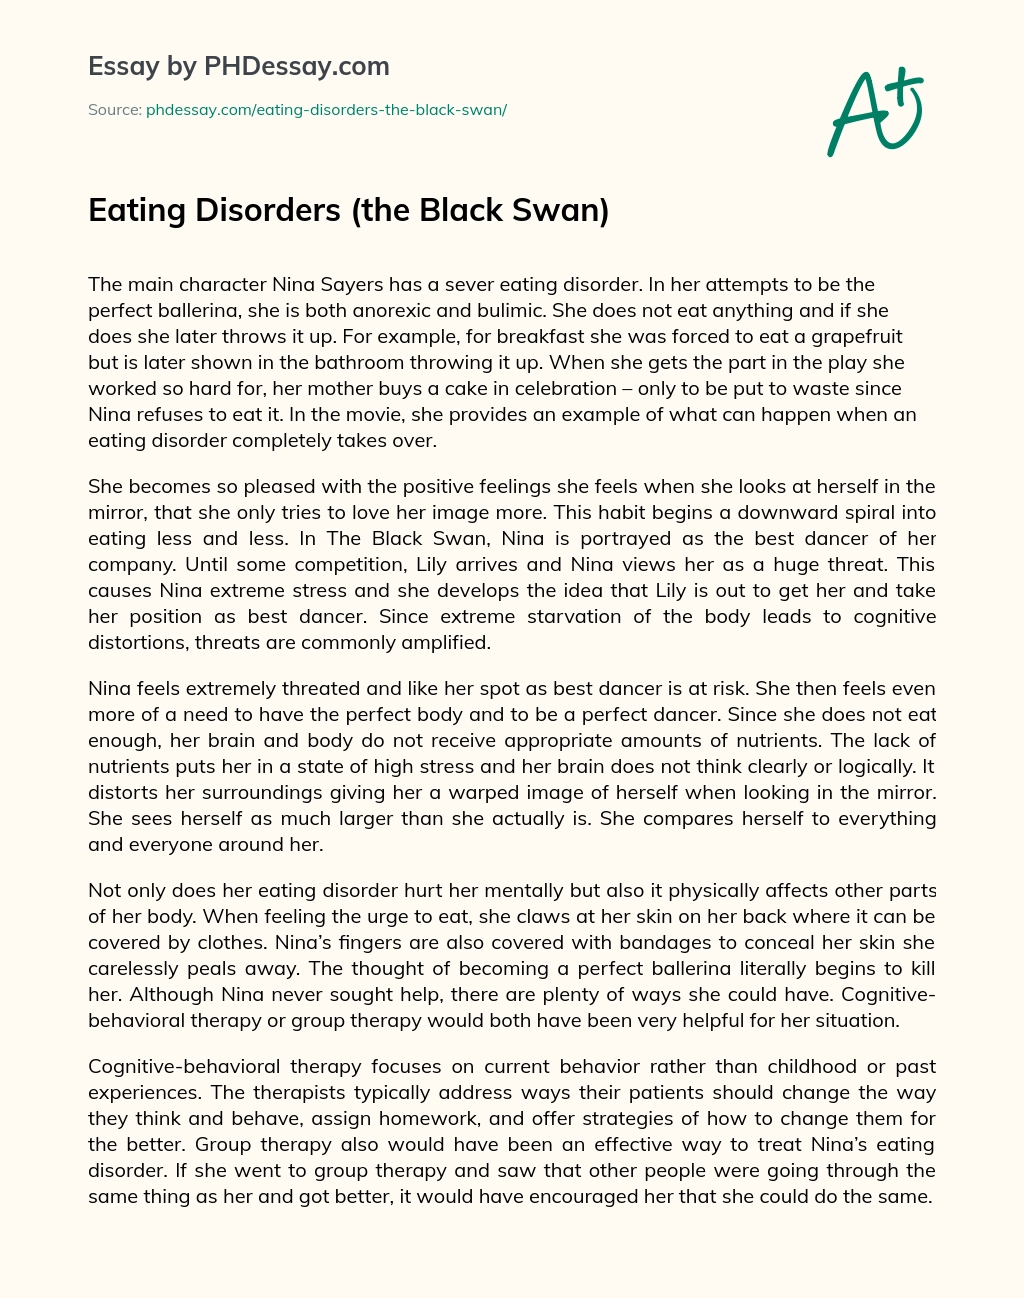 Eating Disorders (the Black Swan) essay